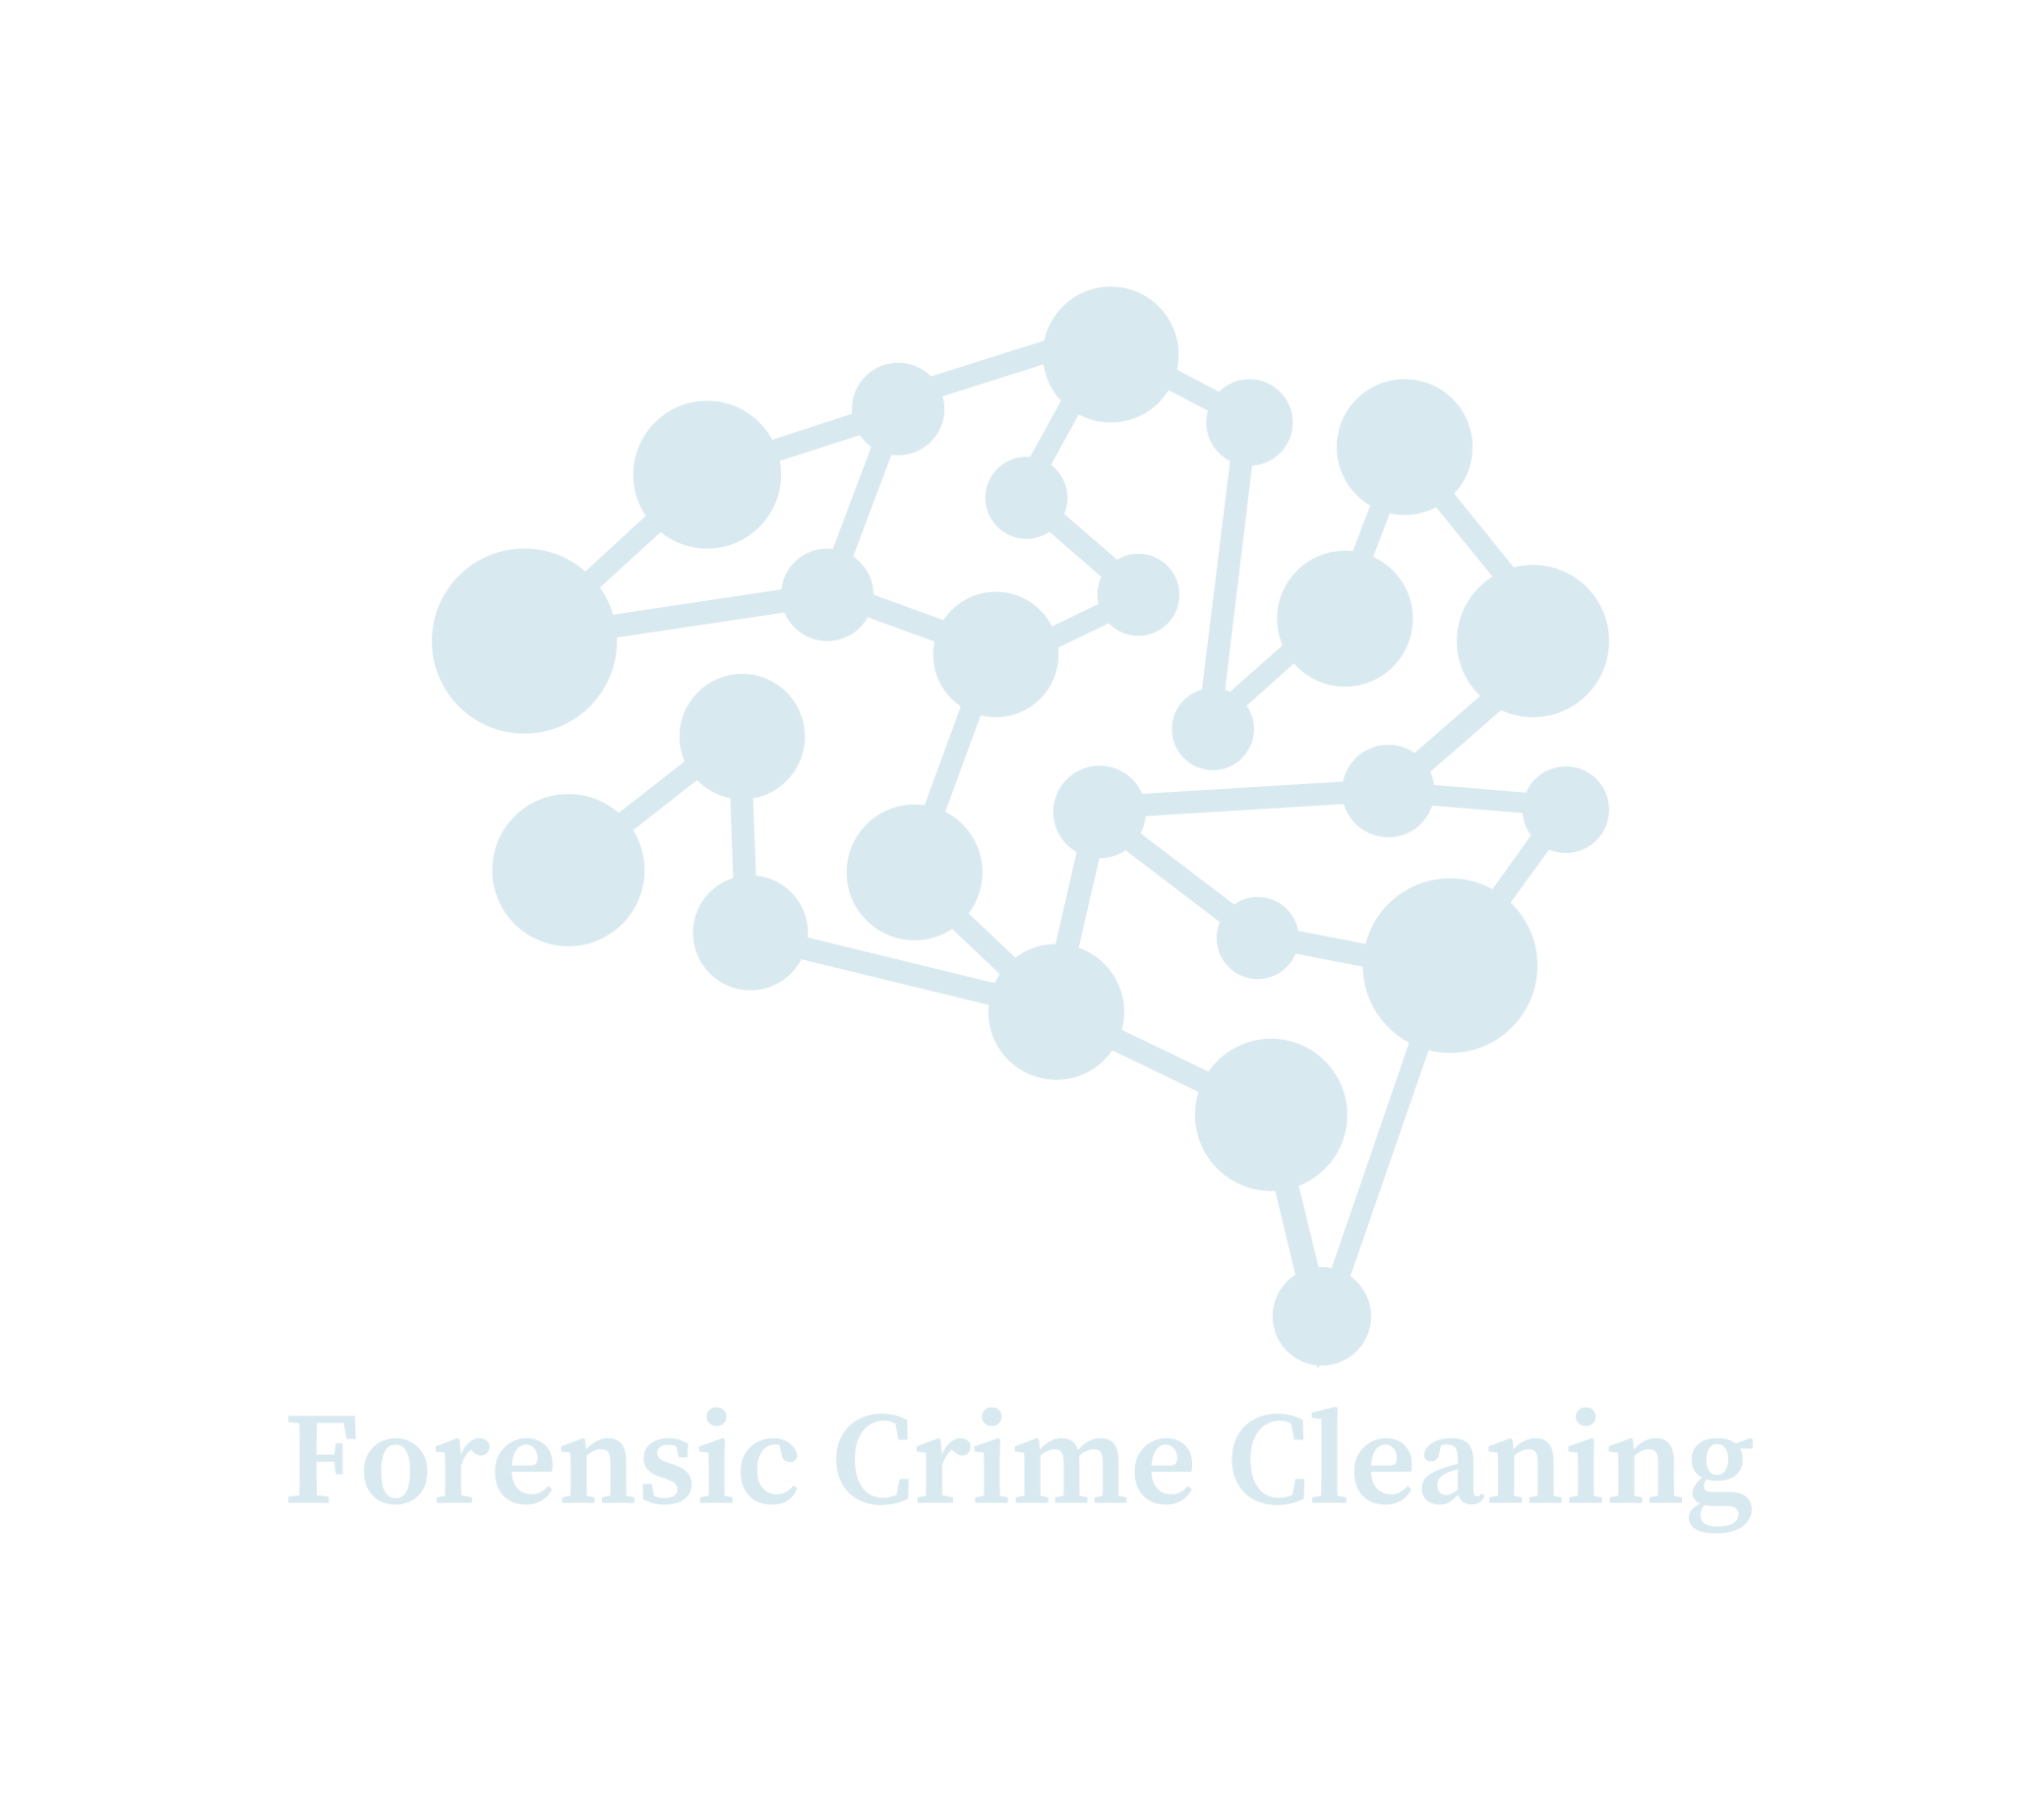 forensic crime scene cleaning transparent logo